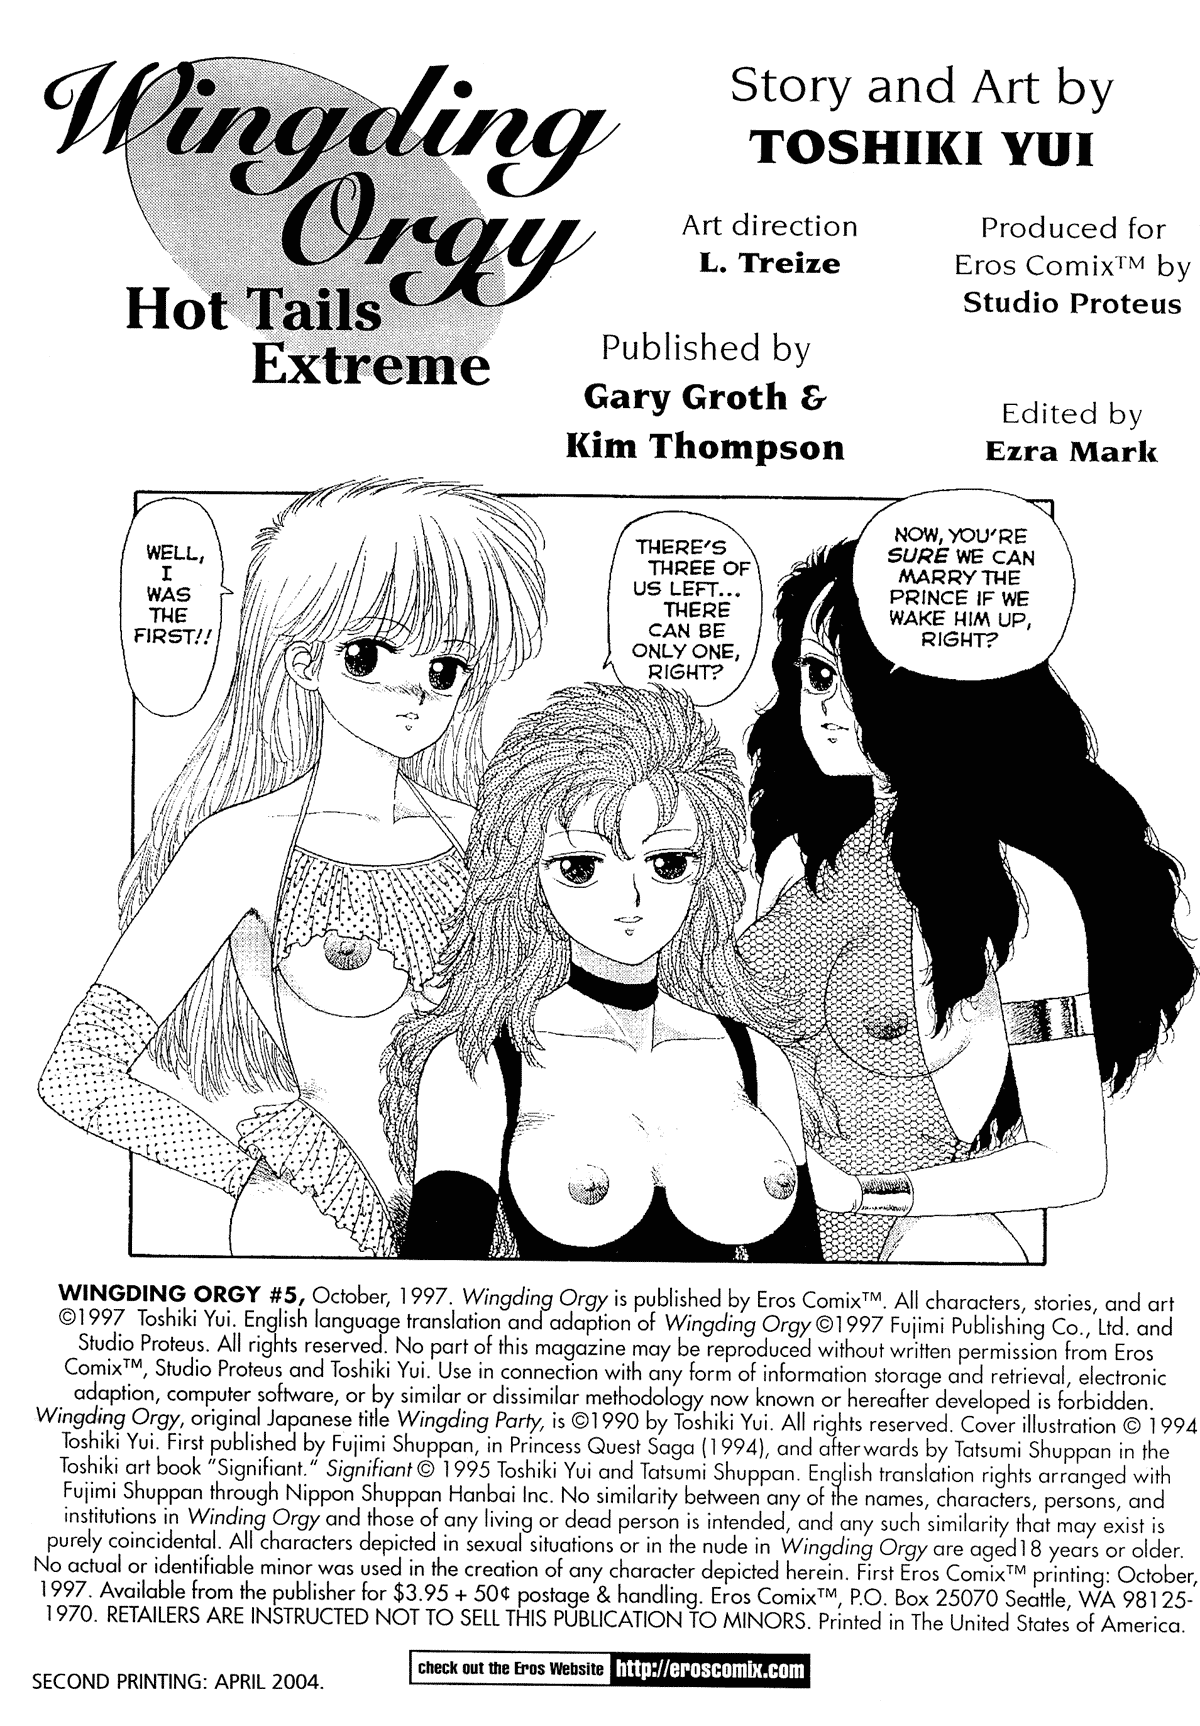 [Toshiki Yui] Wingding Orgy: Hot Tails Extreme #5 [English] 